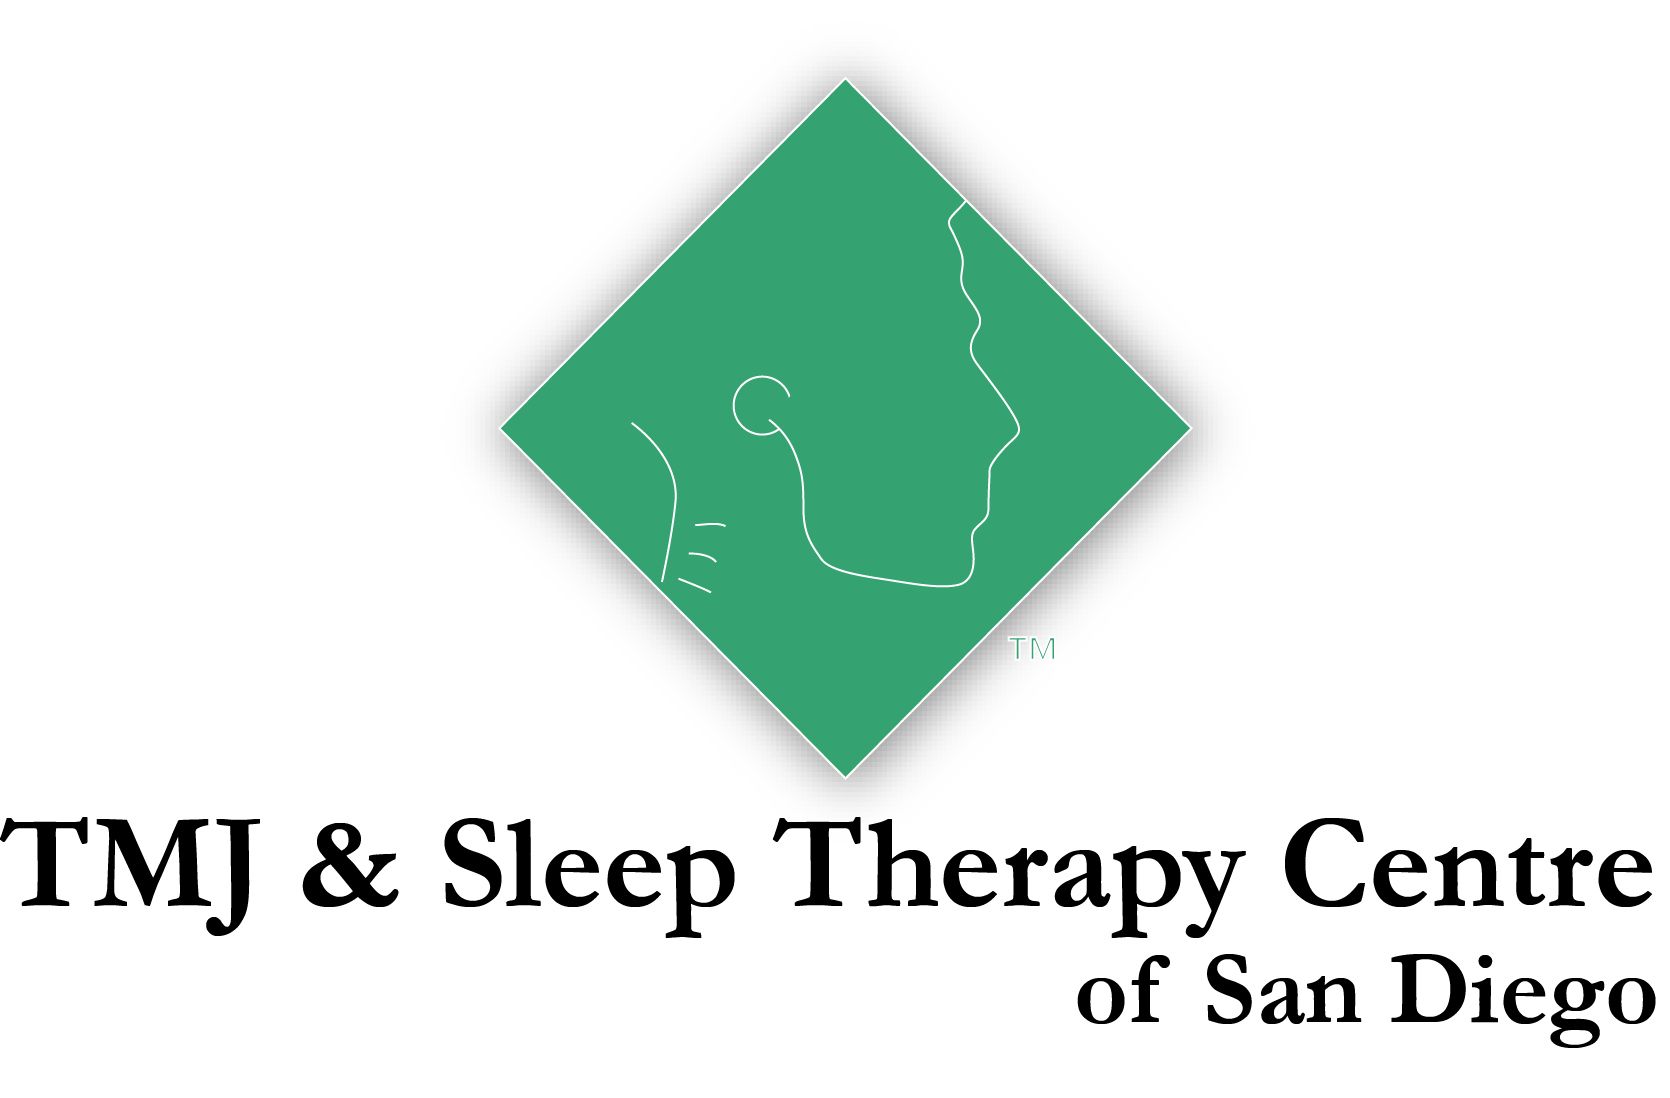 The TMJ & Sleep Therapy Centre of San Diego Logo